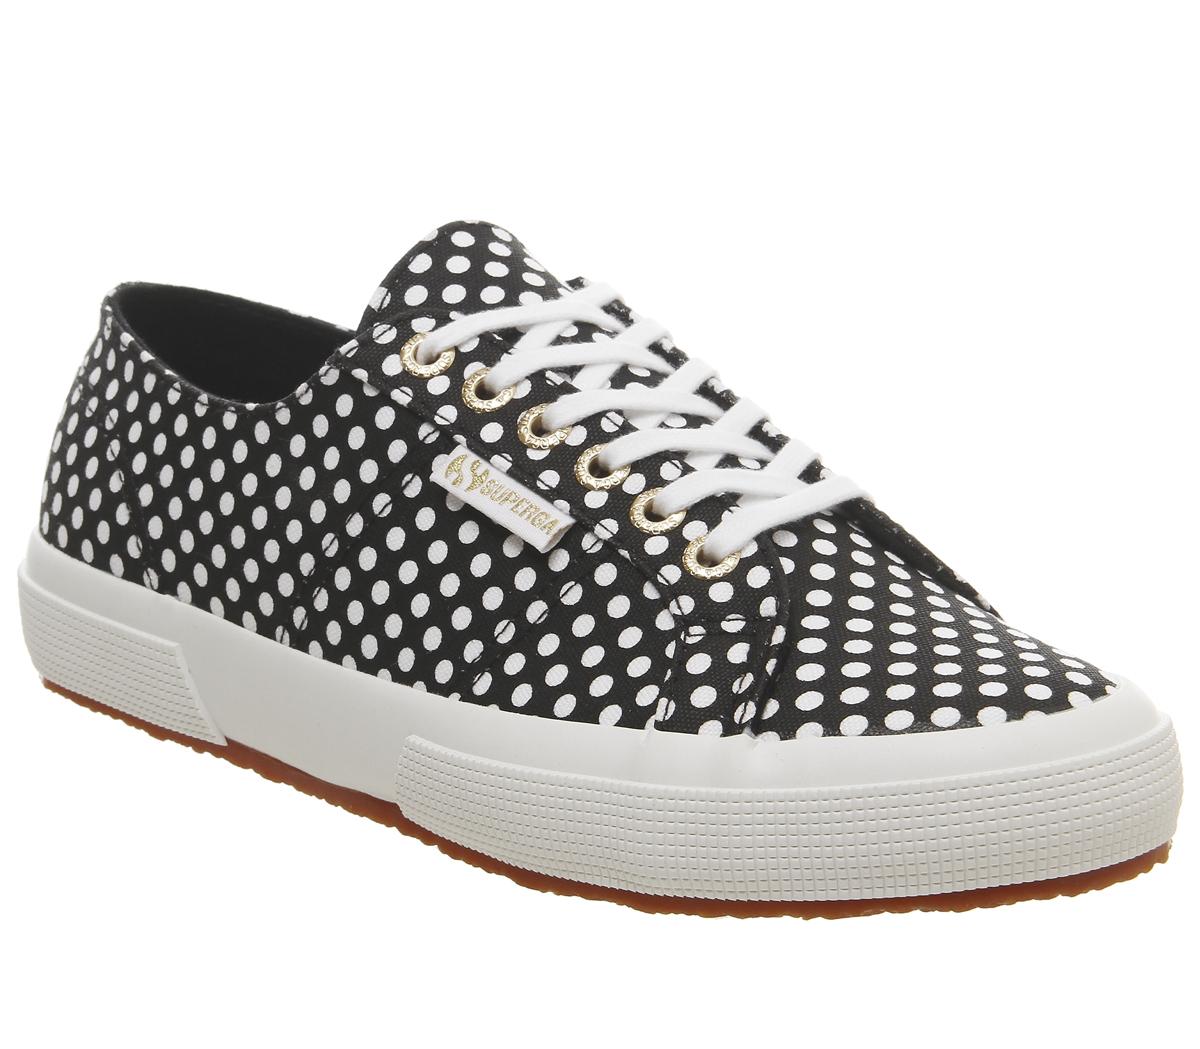 black and white polka dot tennis shoes